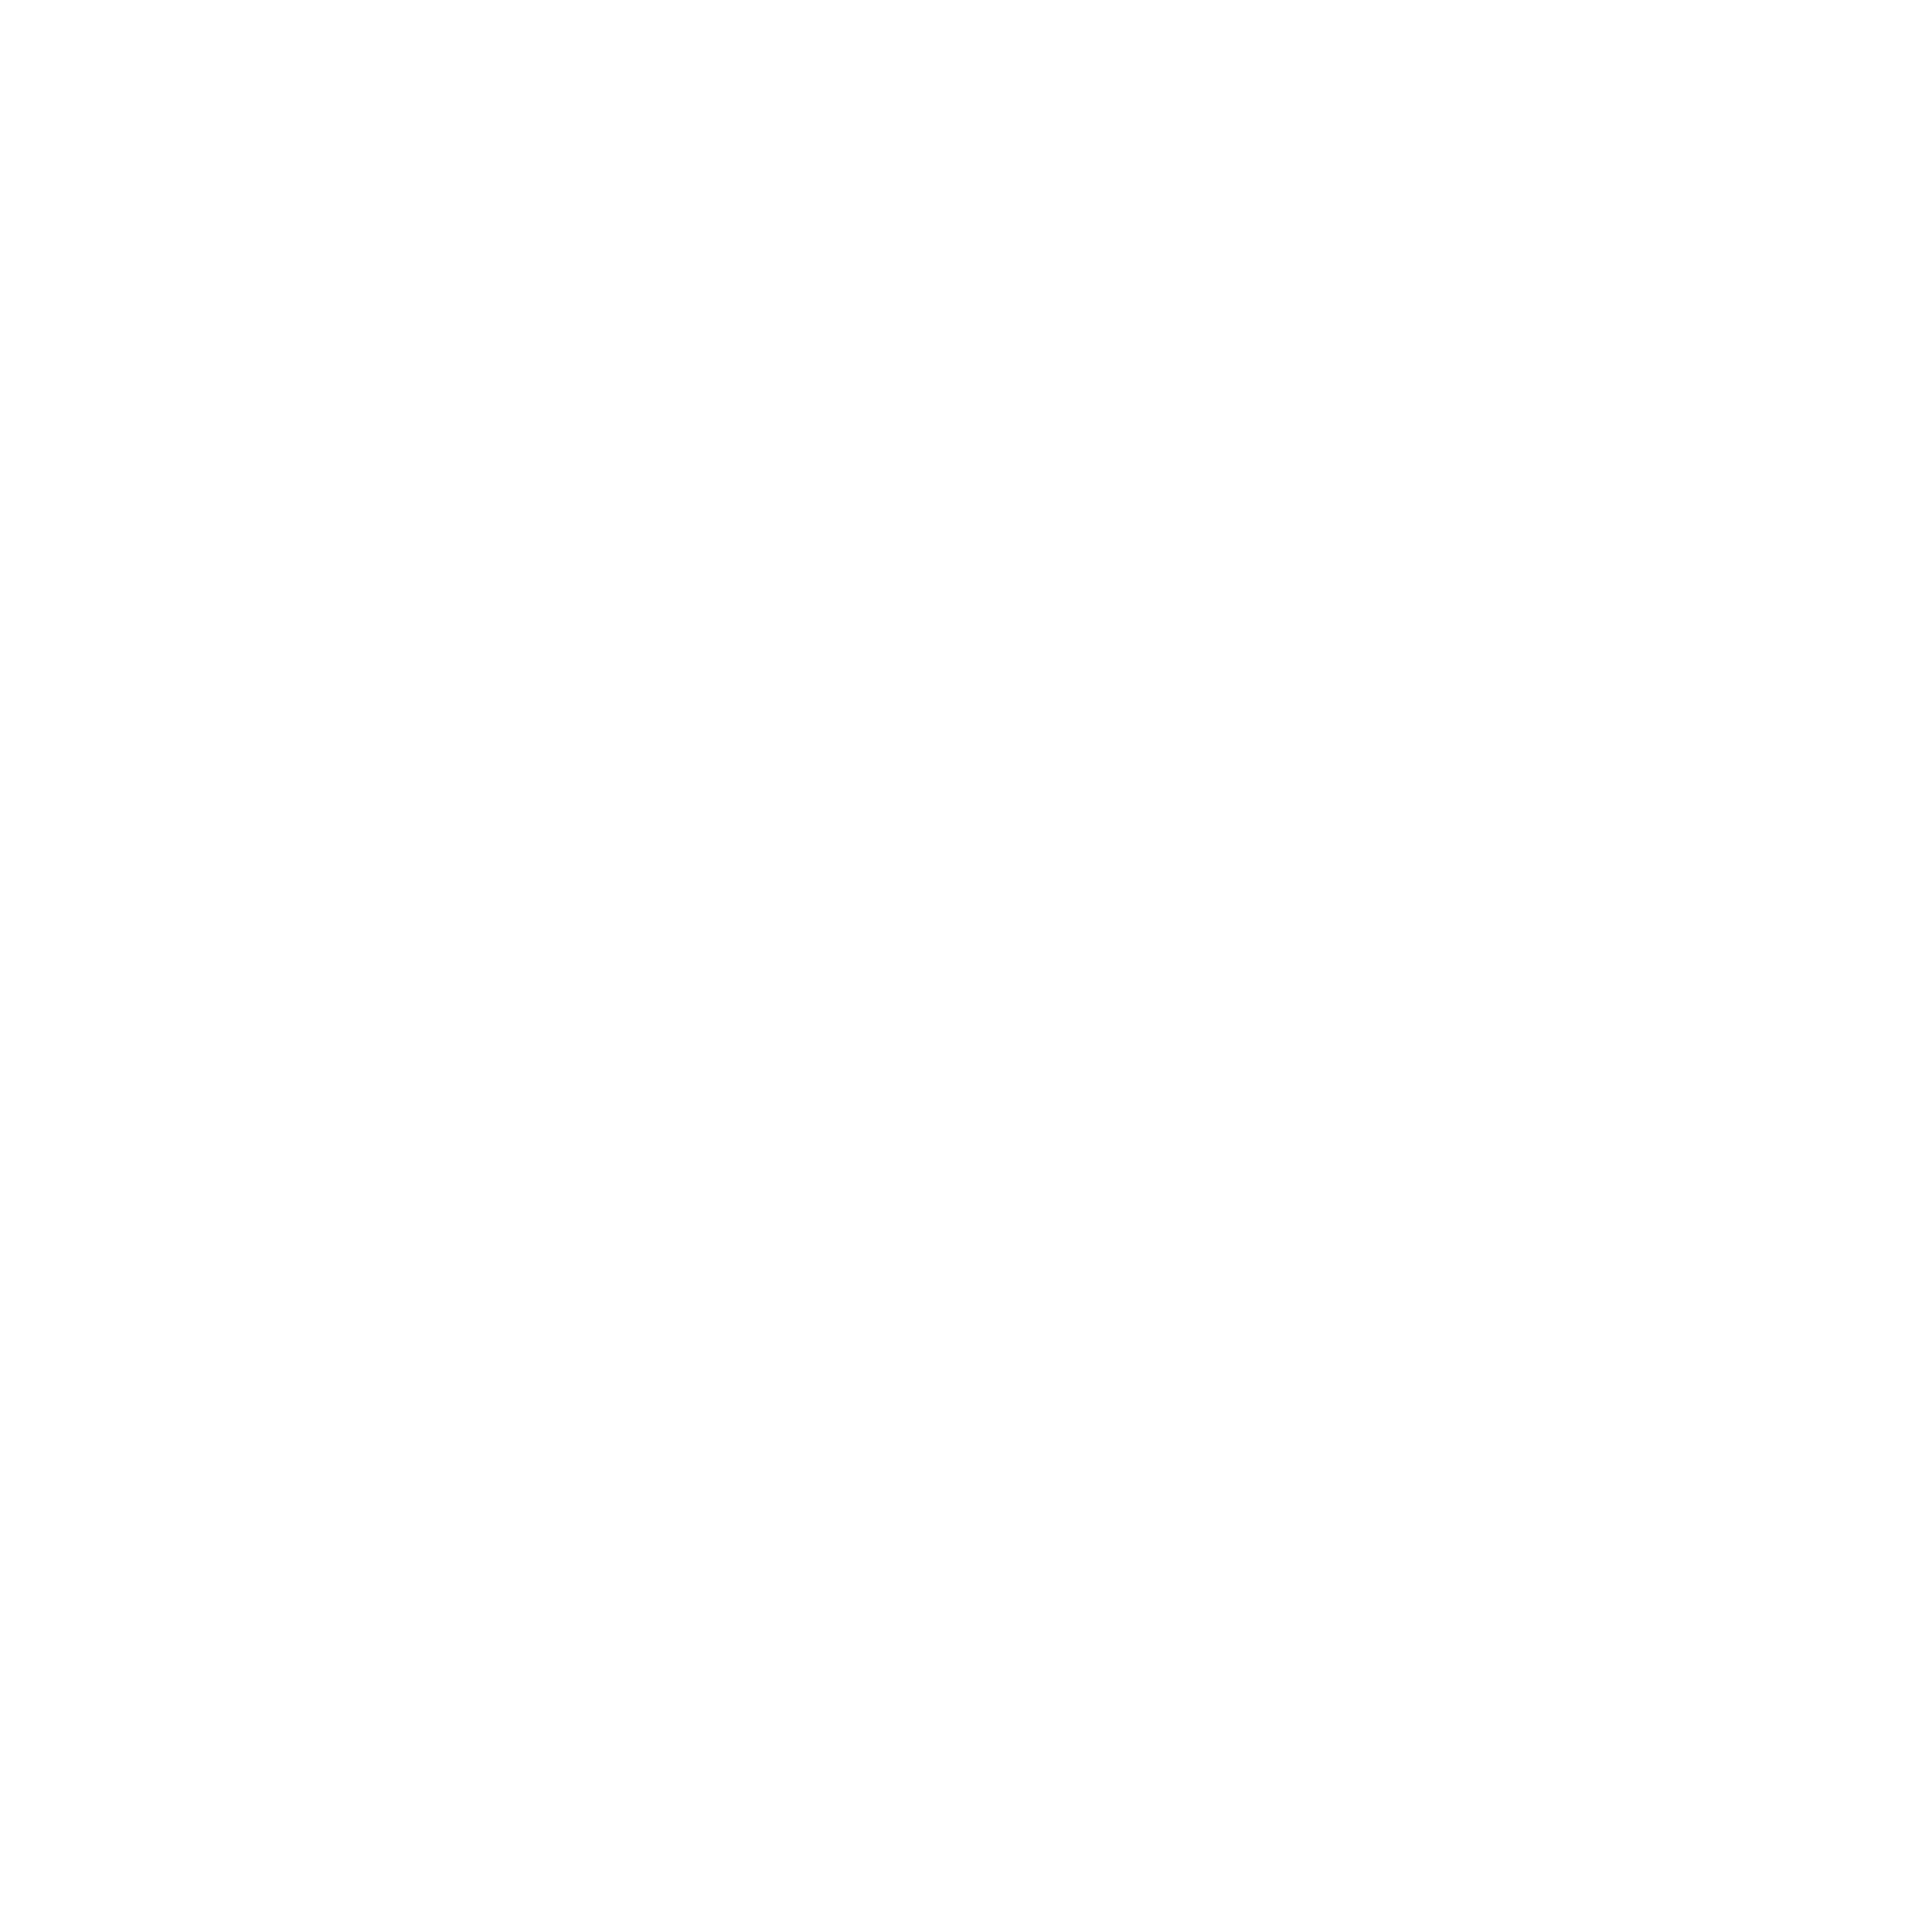 Shell Island Pontoons